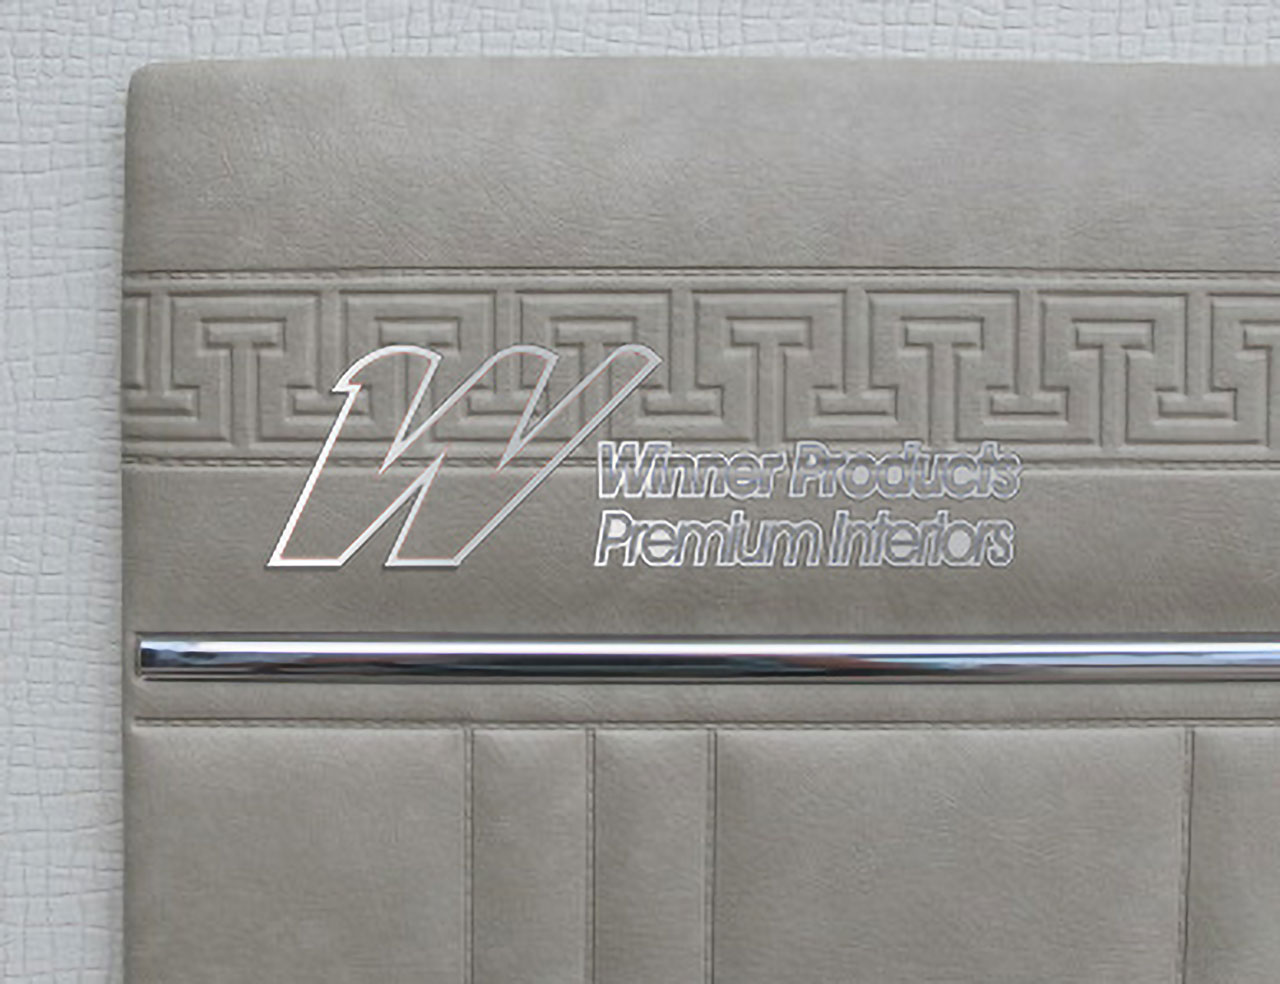 Holden Kingswood HG Kingswood Panel Van 18G Sandalwood & Castillion Weave Door Trims (Image 3 of 3)